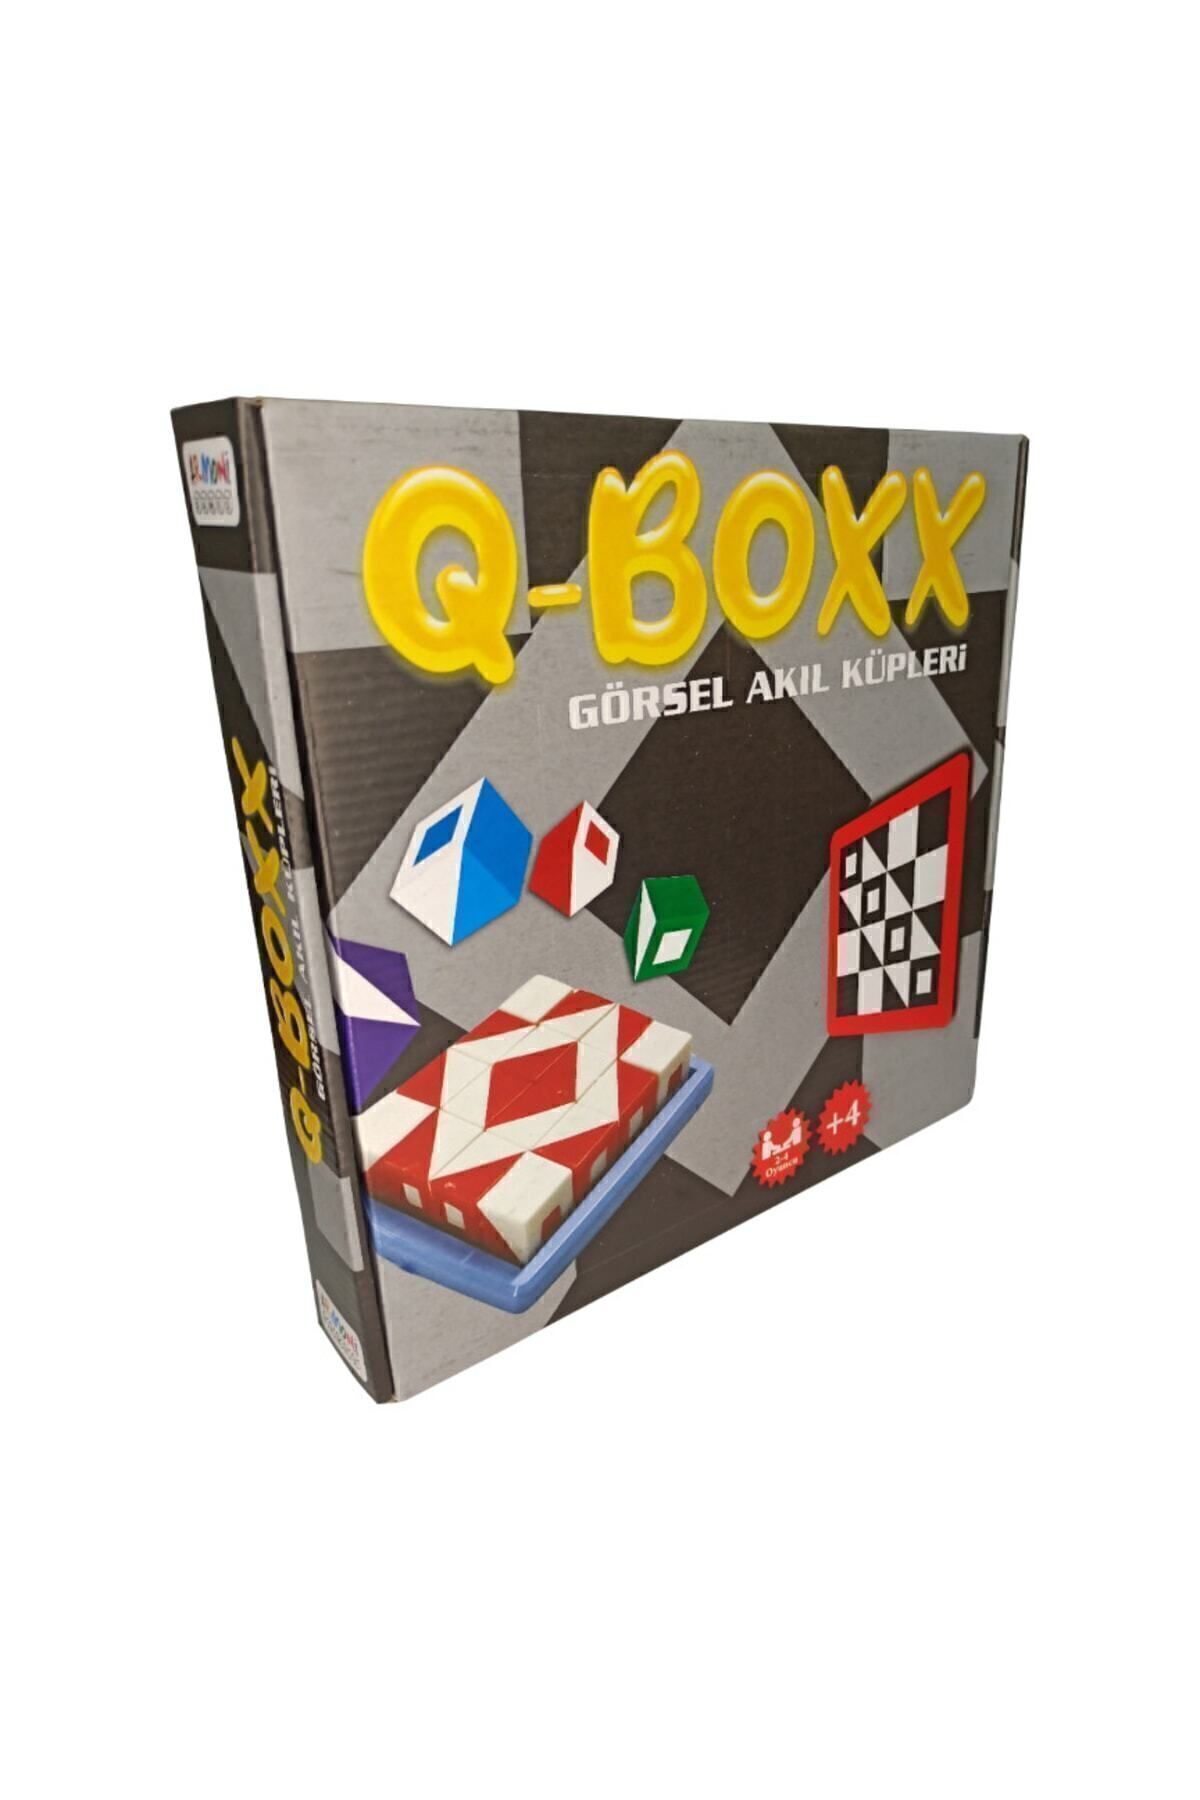 ELUX Q-boxx Cubes Qbitz Görsel Akıl Küpleri (YENİLENDİ) Q-bitz Q-smart Q Smart Küp Oyunu